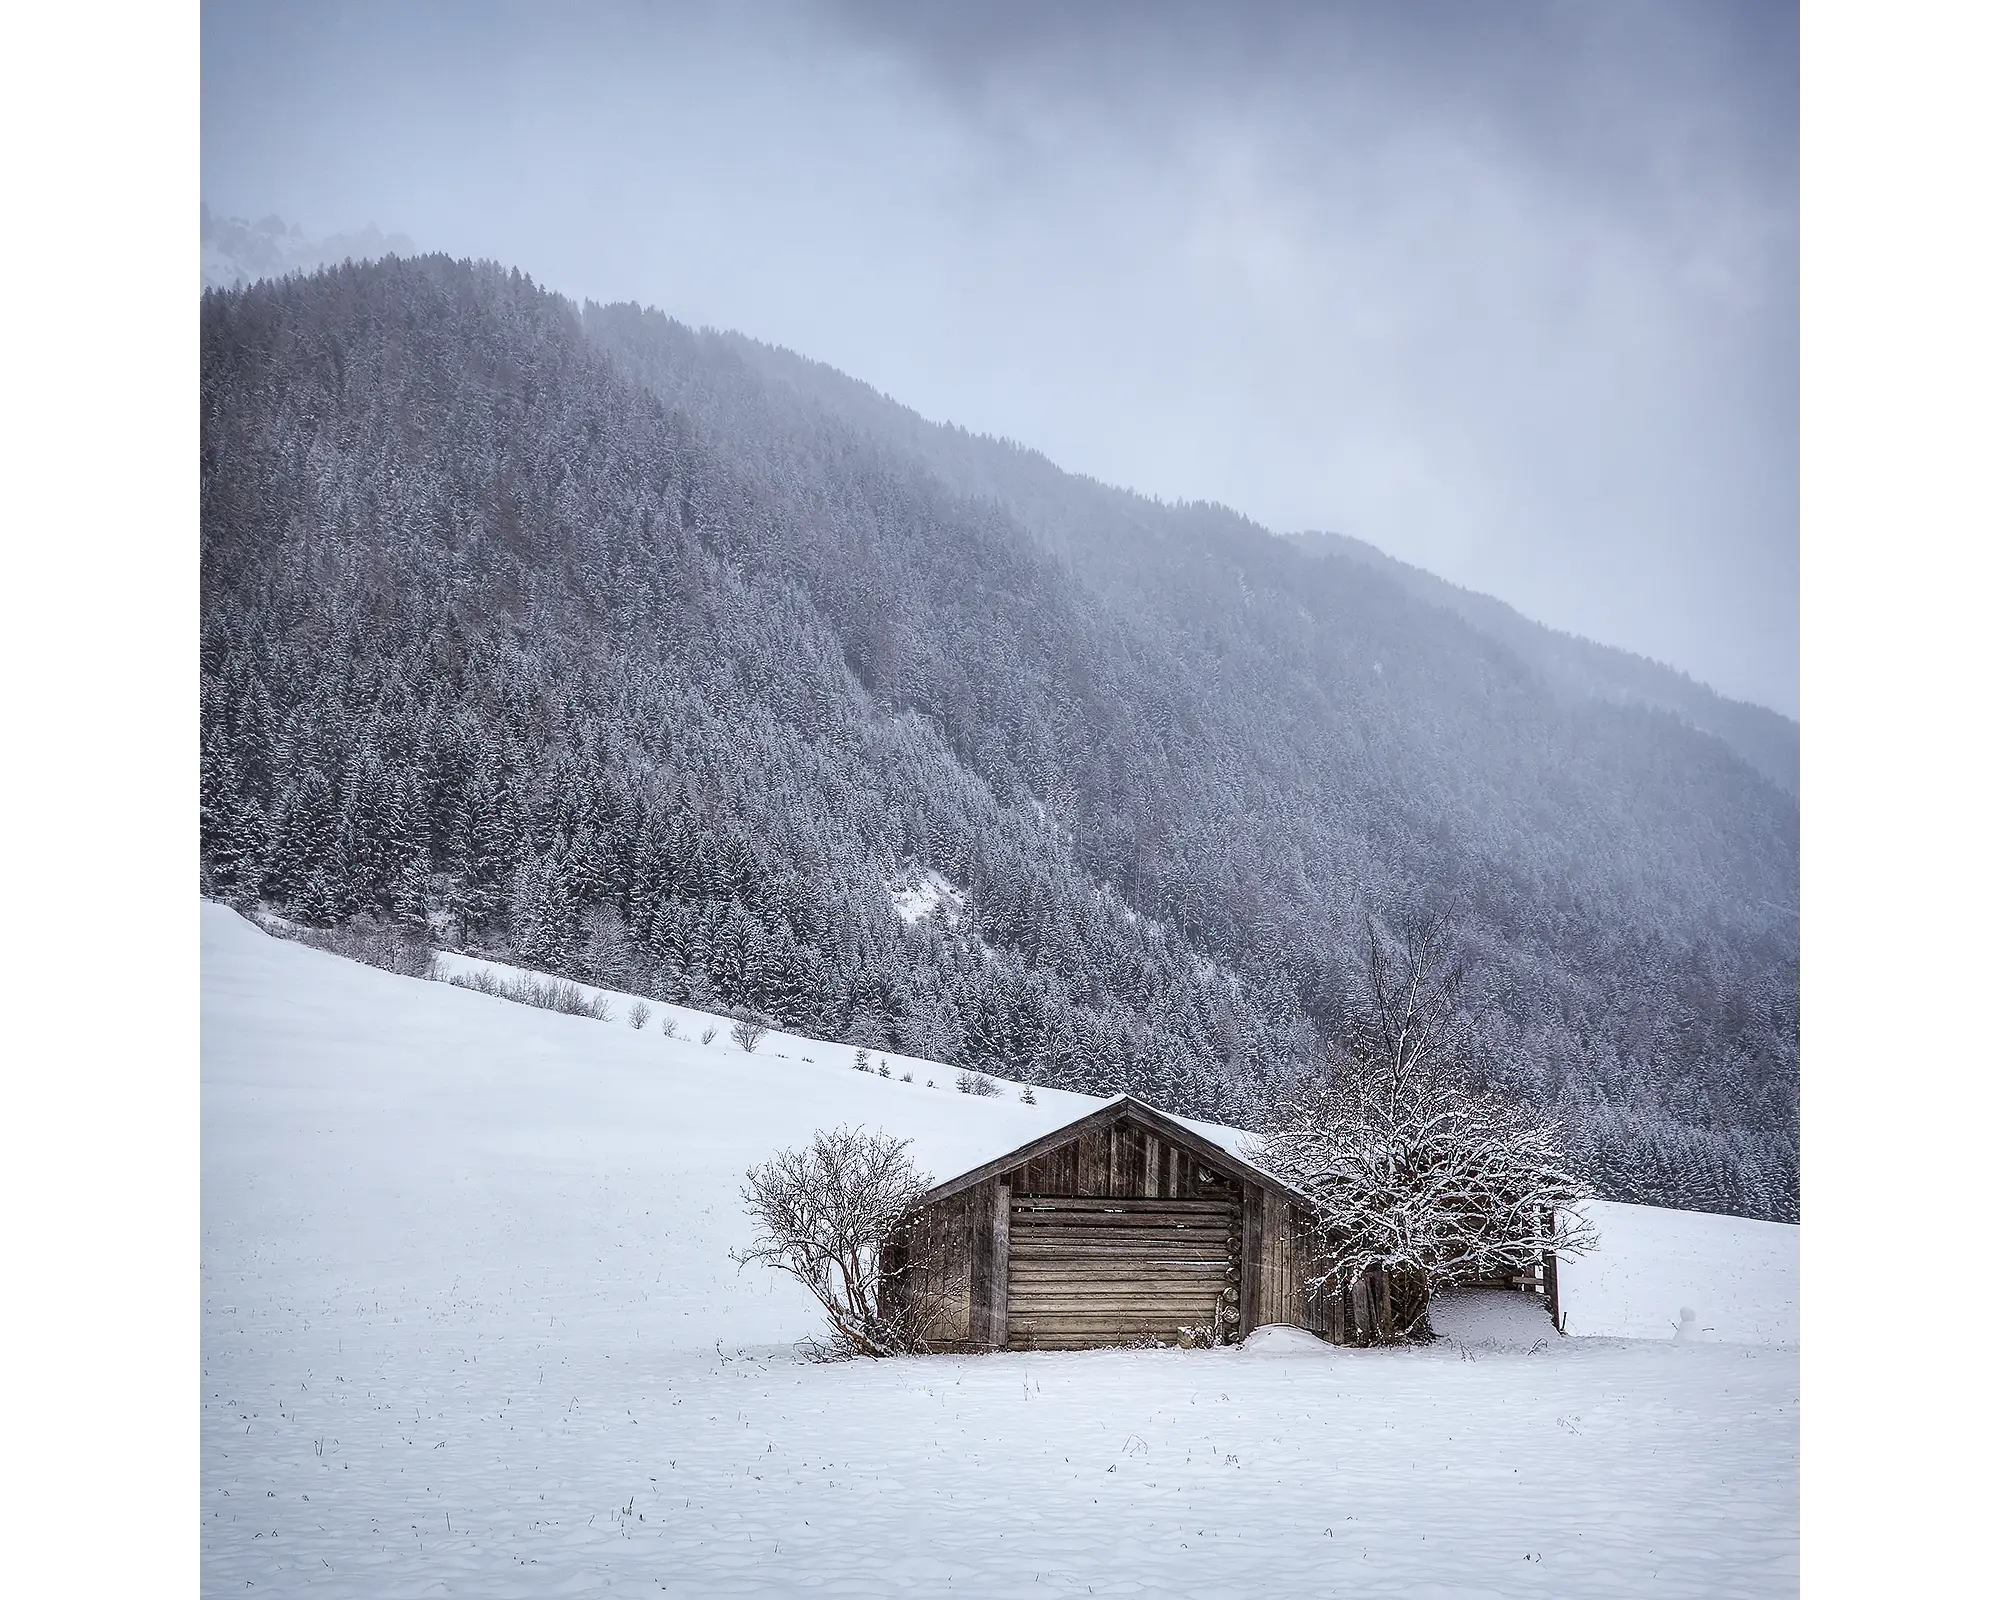 Christmas Snow. Farmhouse covered in snow, Nustift, Tyrol, Austria.